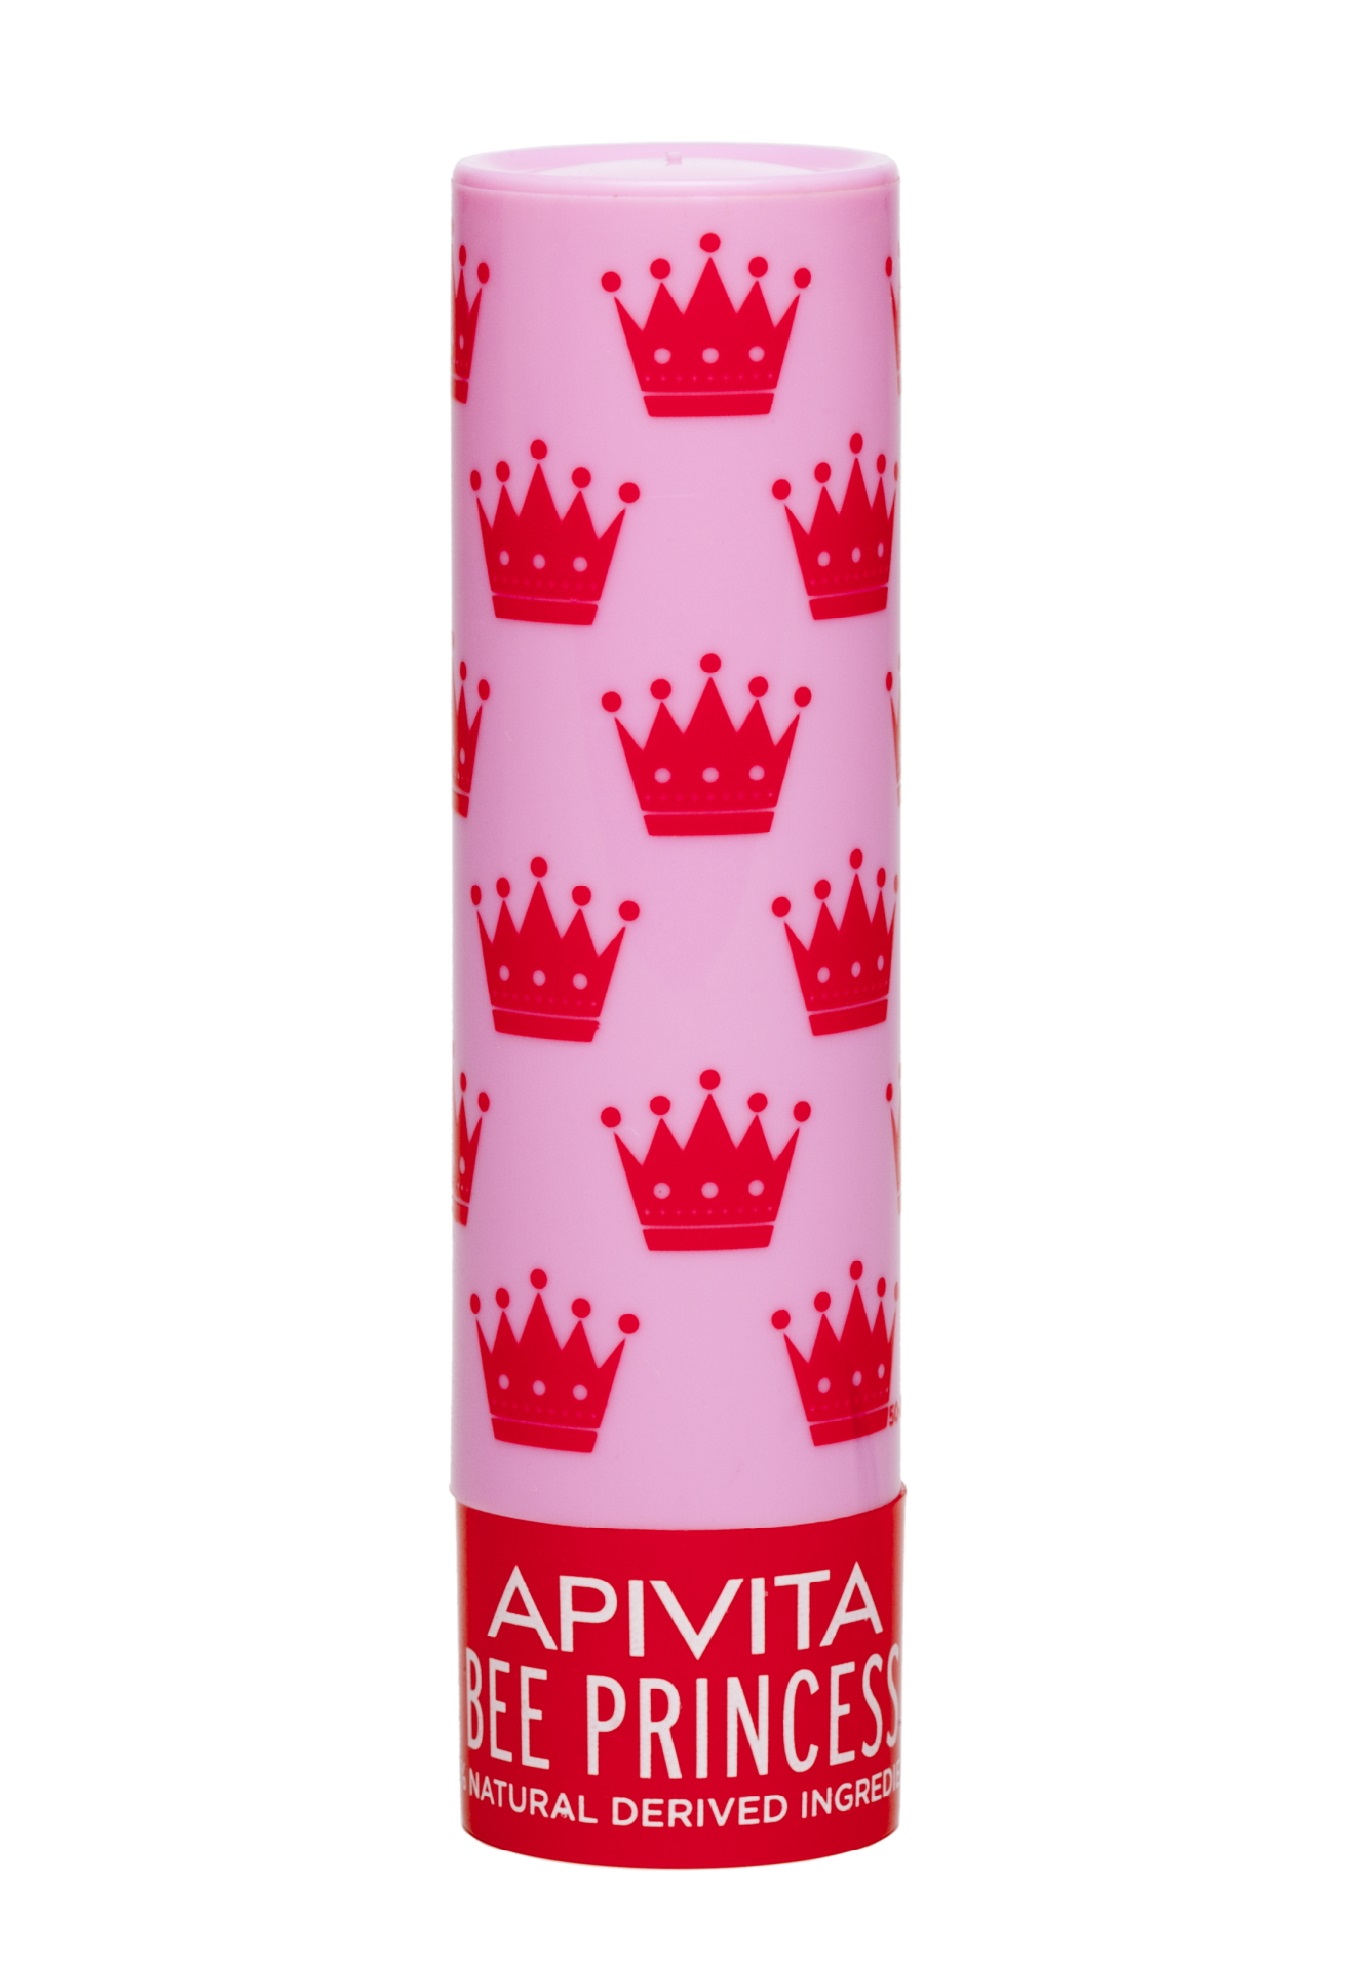 Apivita Уход для губ Принцесса Пчела Био, 4,4 г (Apivita, Lip Care) уход за губами апивита уход для губ принцесса пчела био